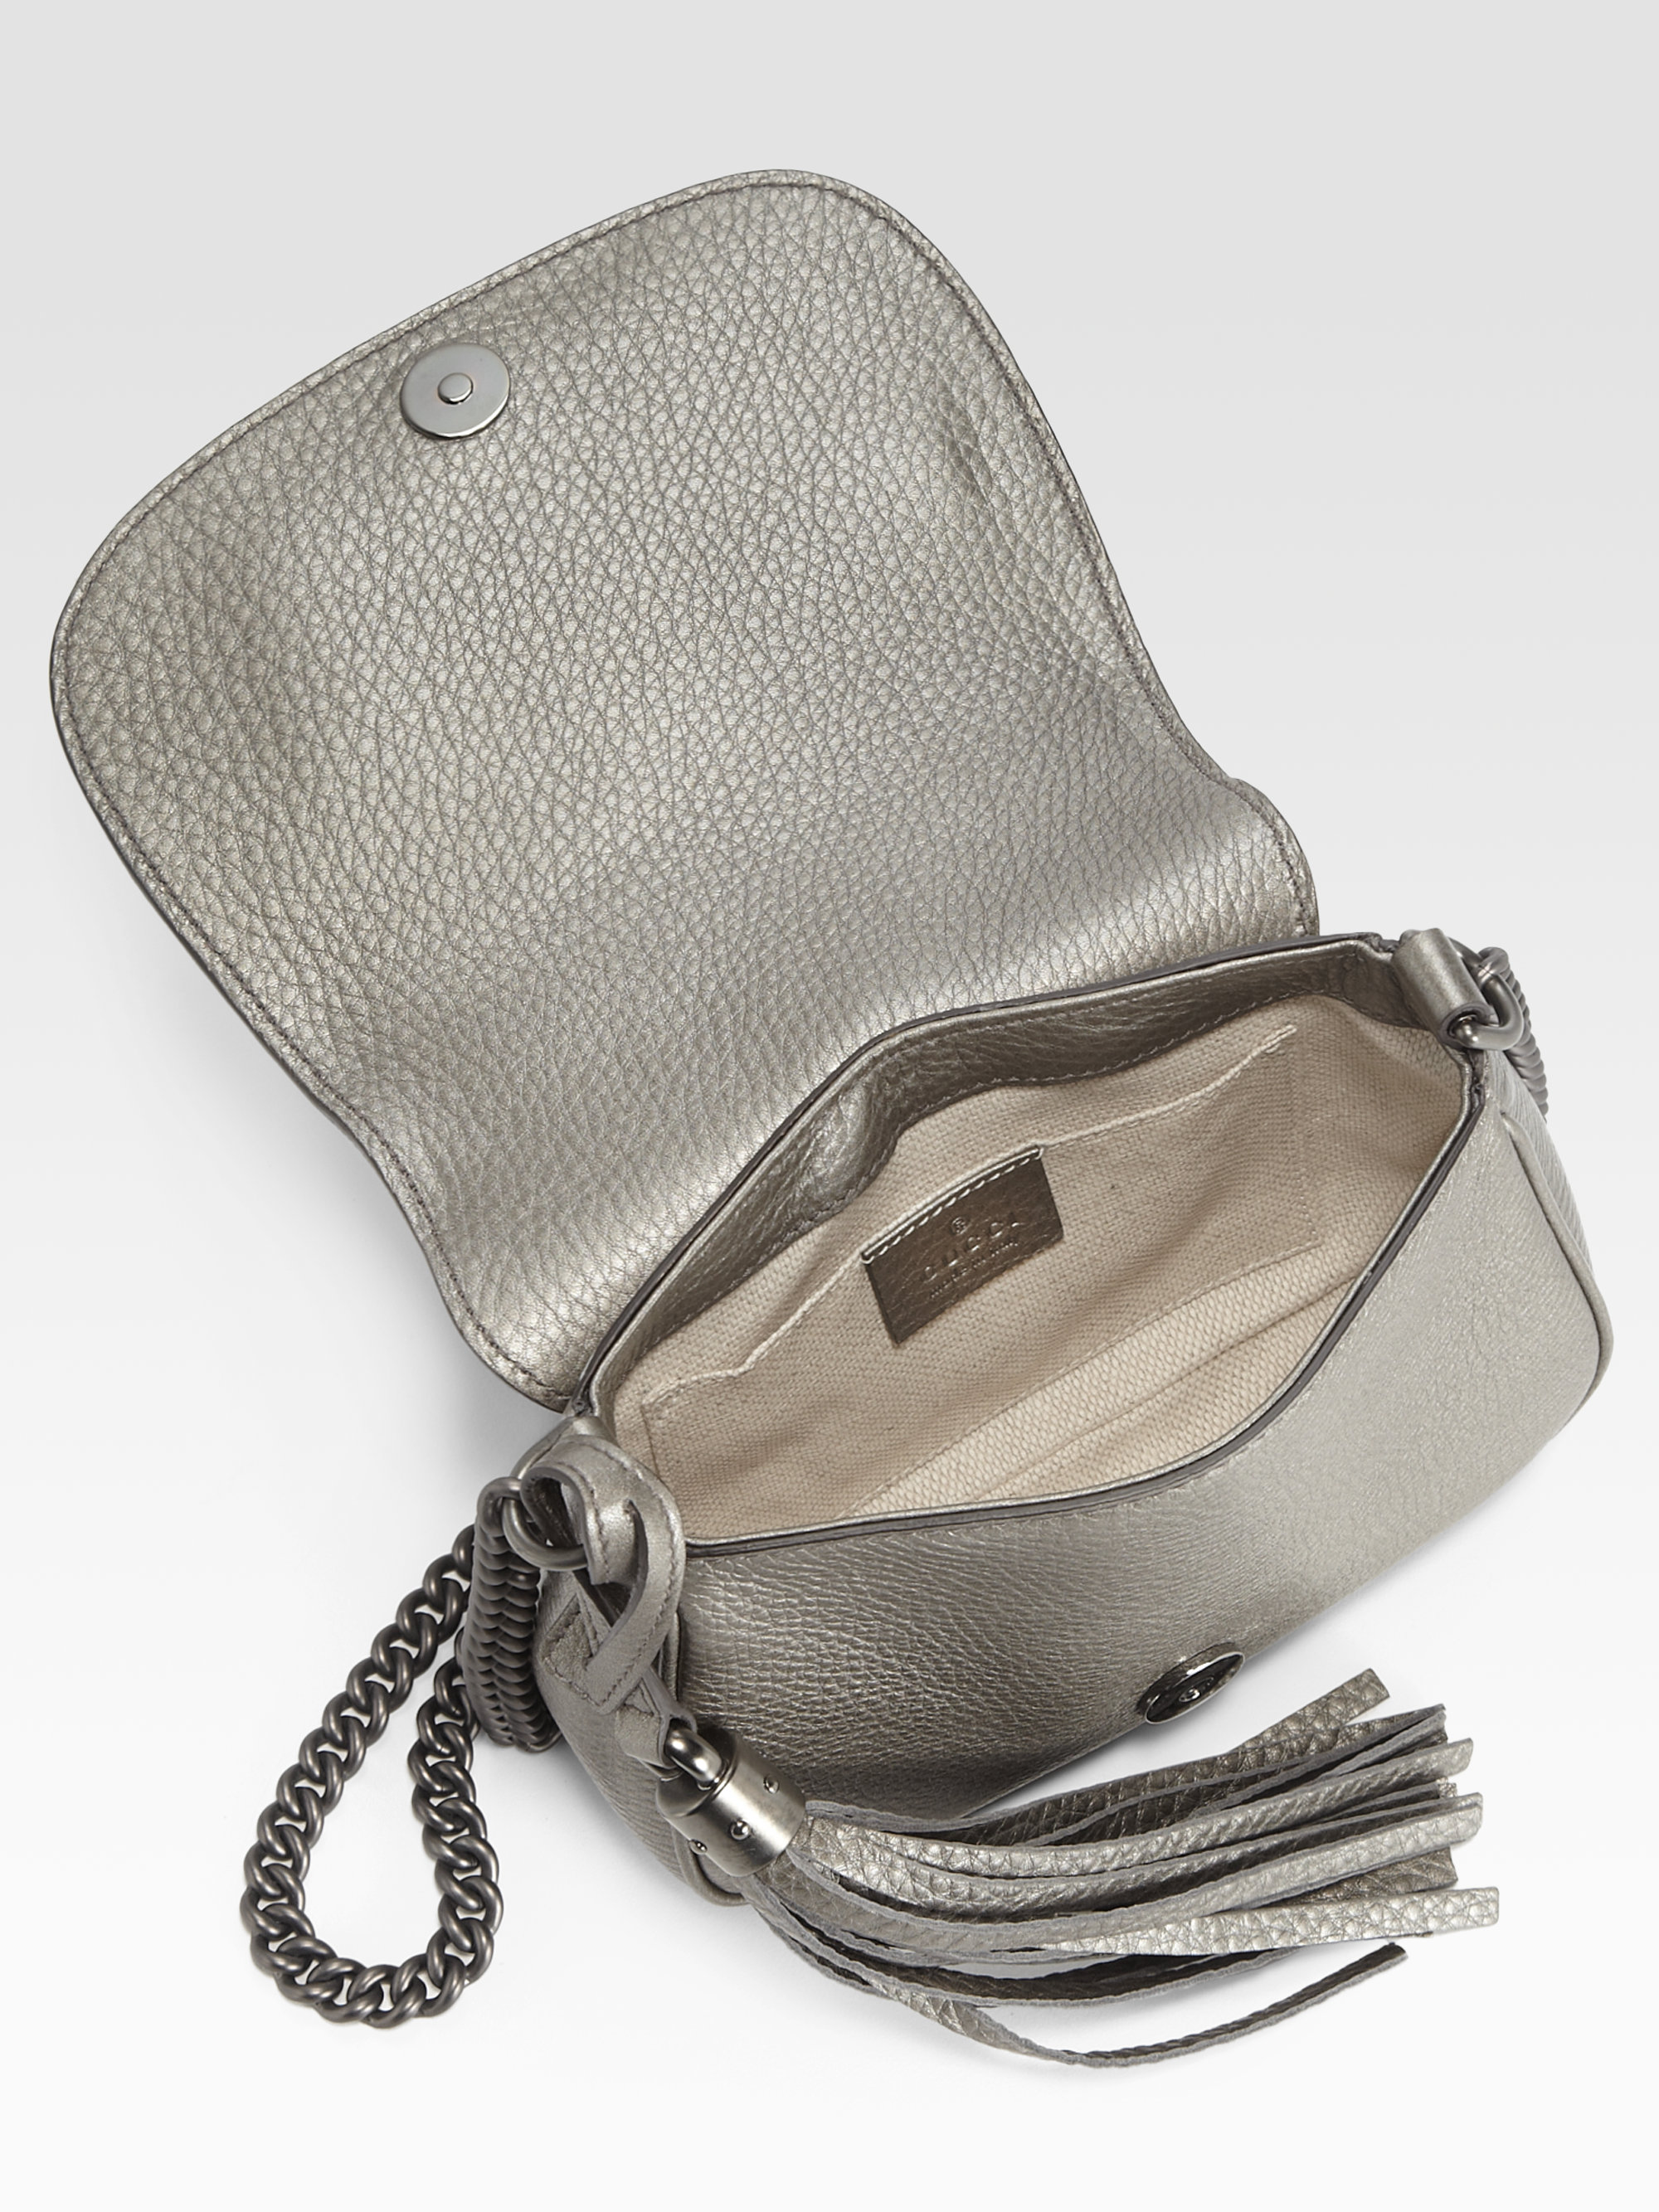 Lyst - Gucci Soho Metallic Leather Chain Shoulder Bag in Metallic